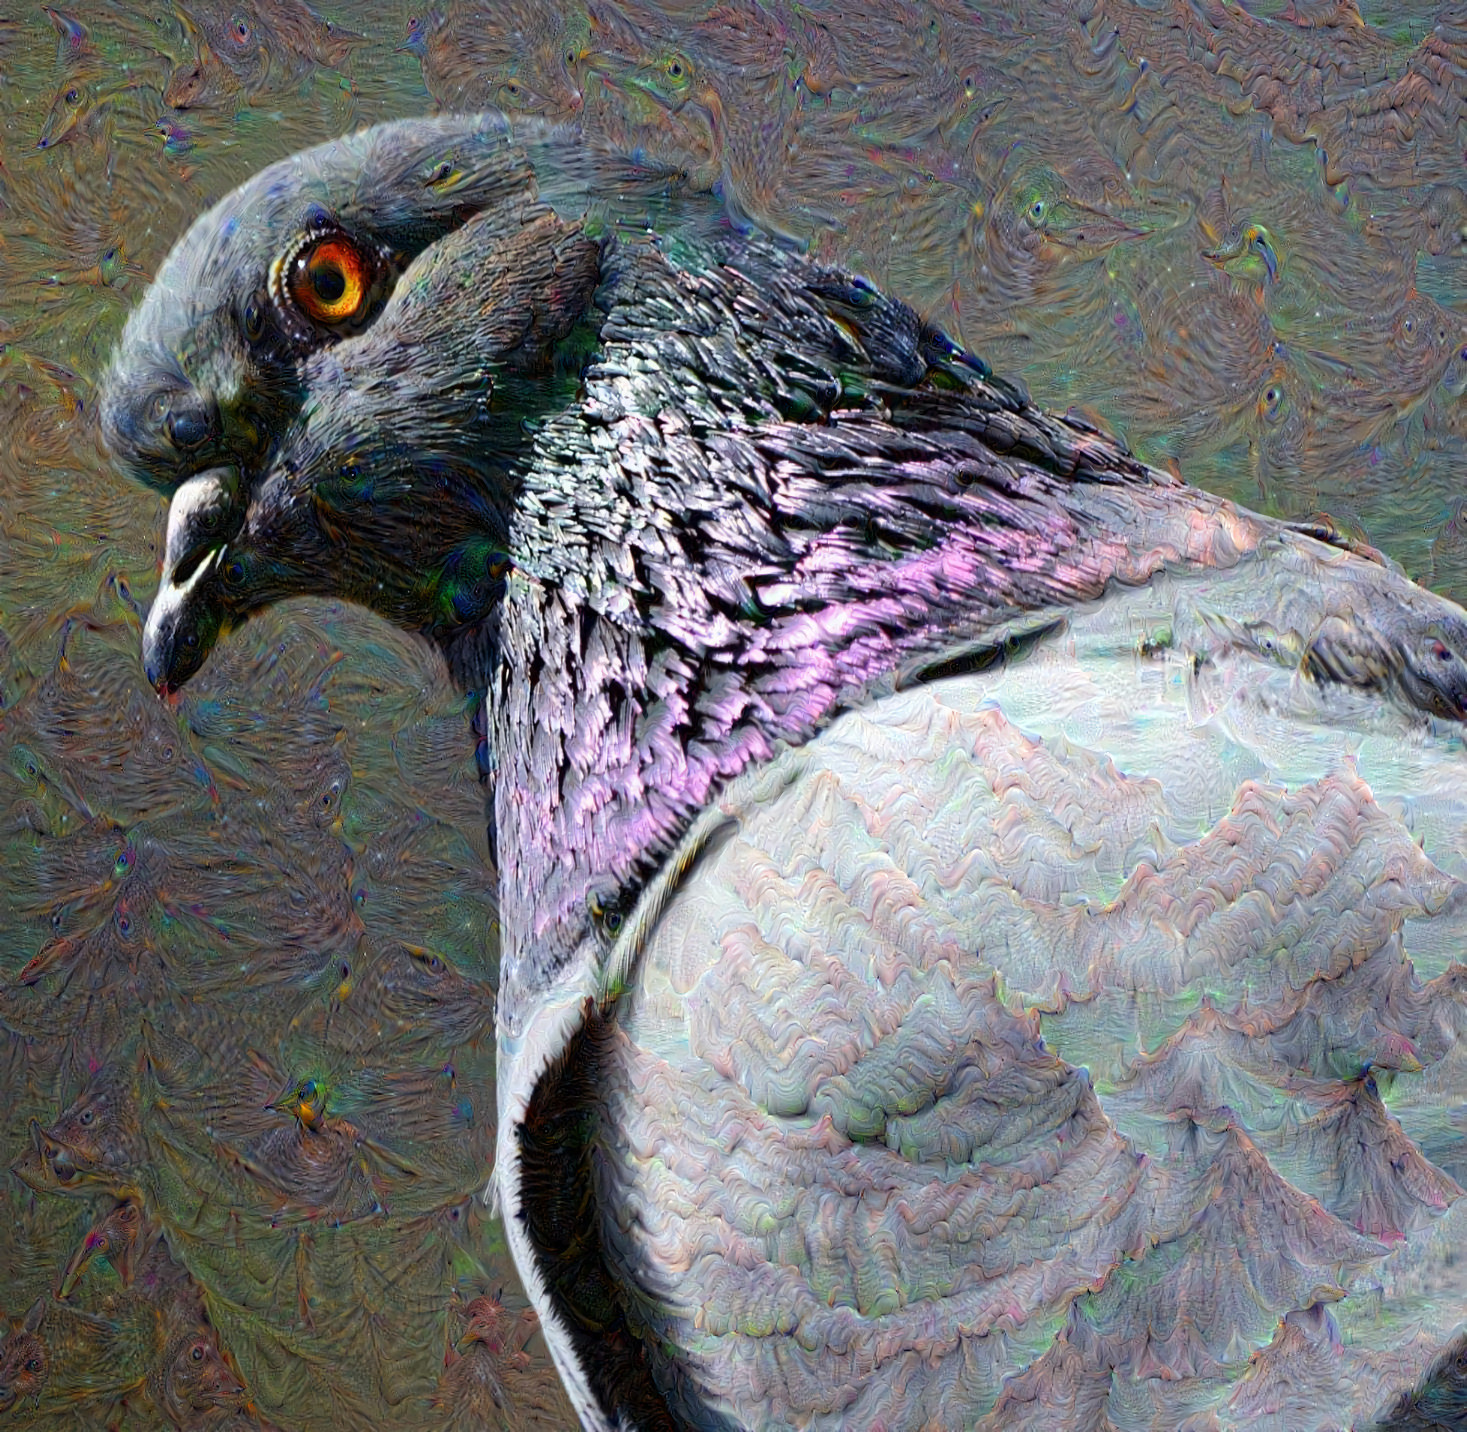 “Common” Pigeon, Toronto, Ontario, Canada. Original photo by Sneha on Unsplash.